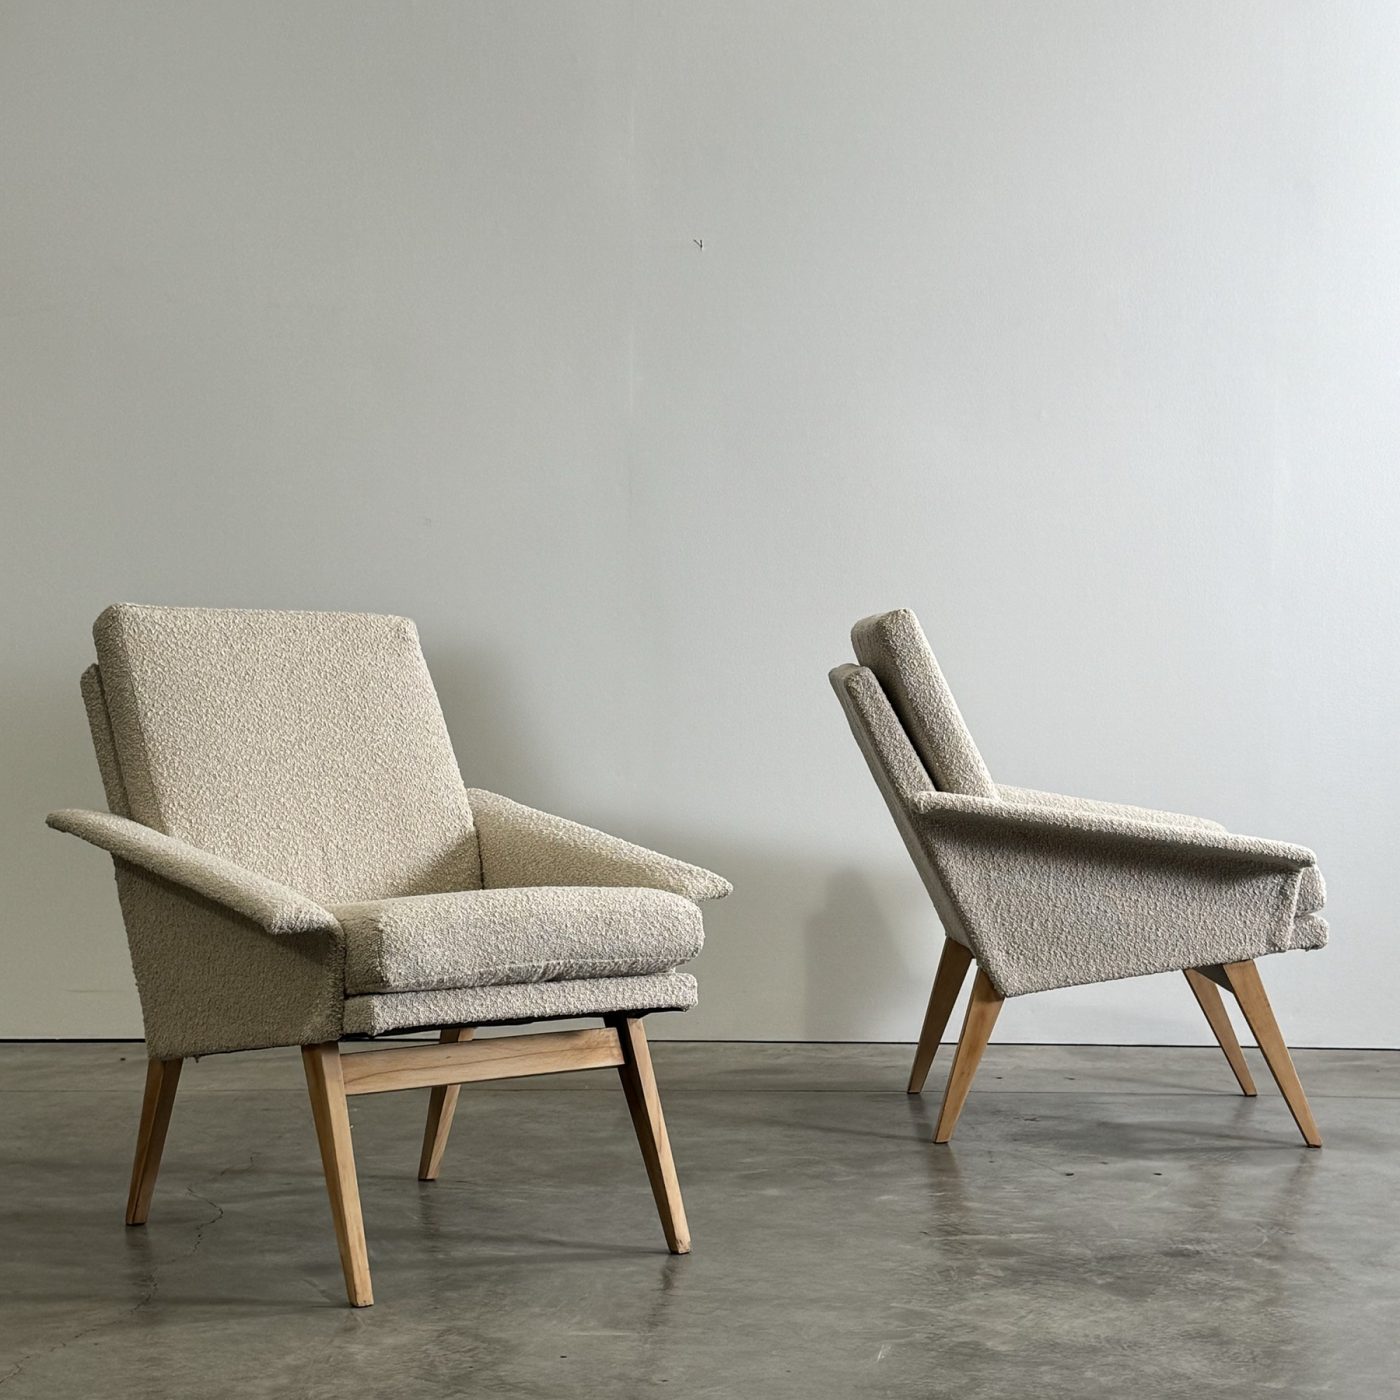 objet-vagabond-vintage-armchairs0005